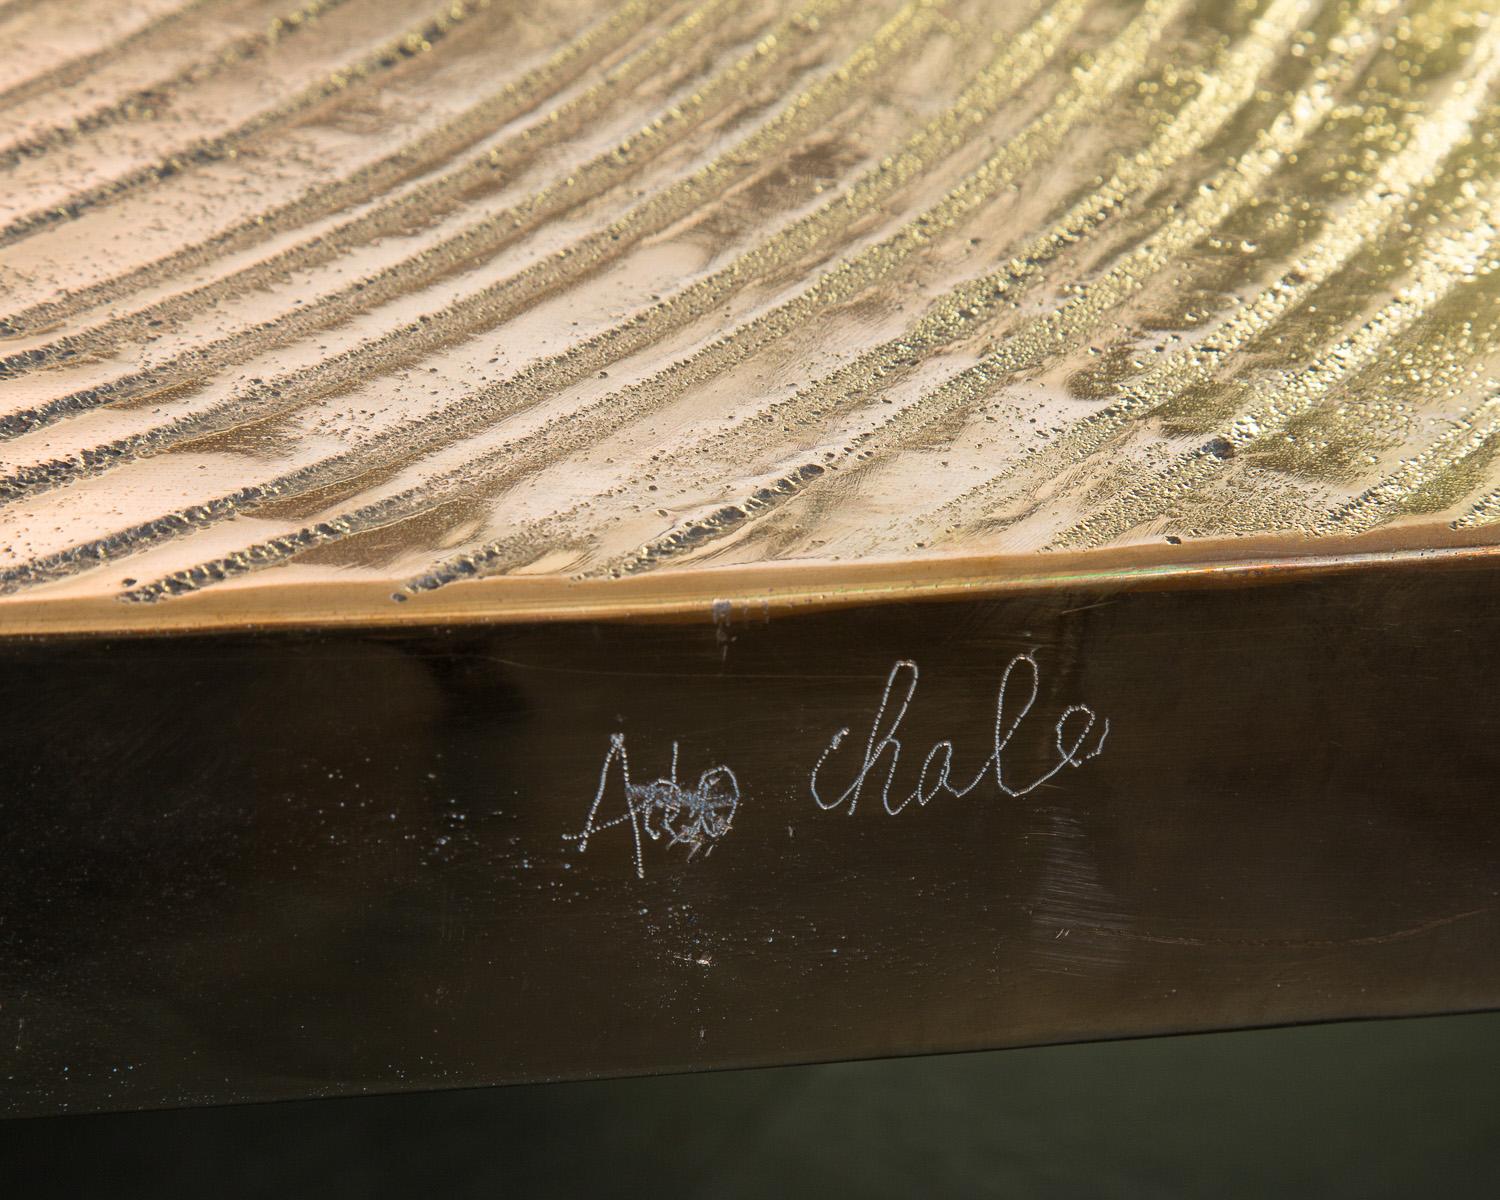 Aluminum Ado Chale Solune Table